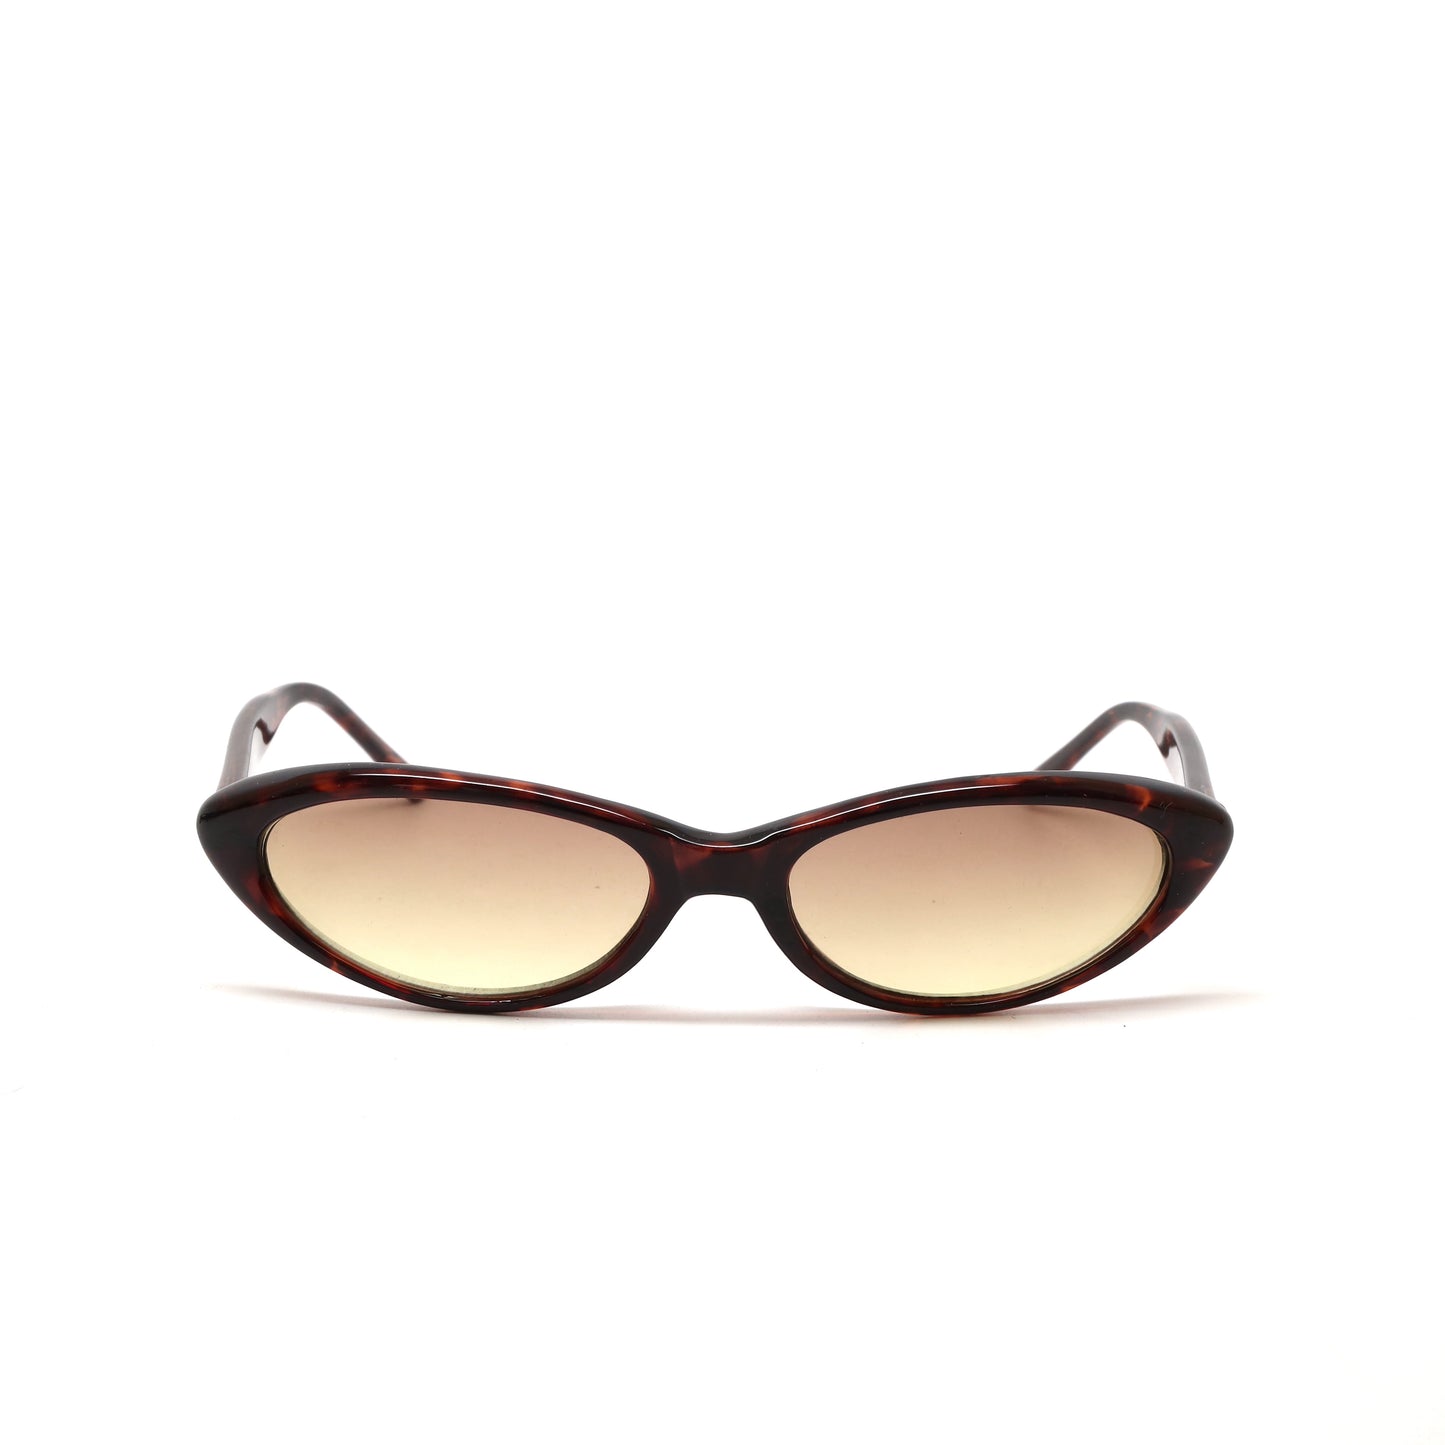 Vintage Small Size Benatar Triangle Sunglasses - Brown